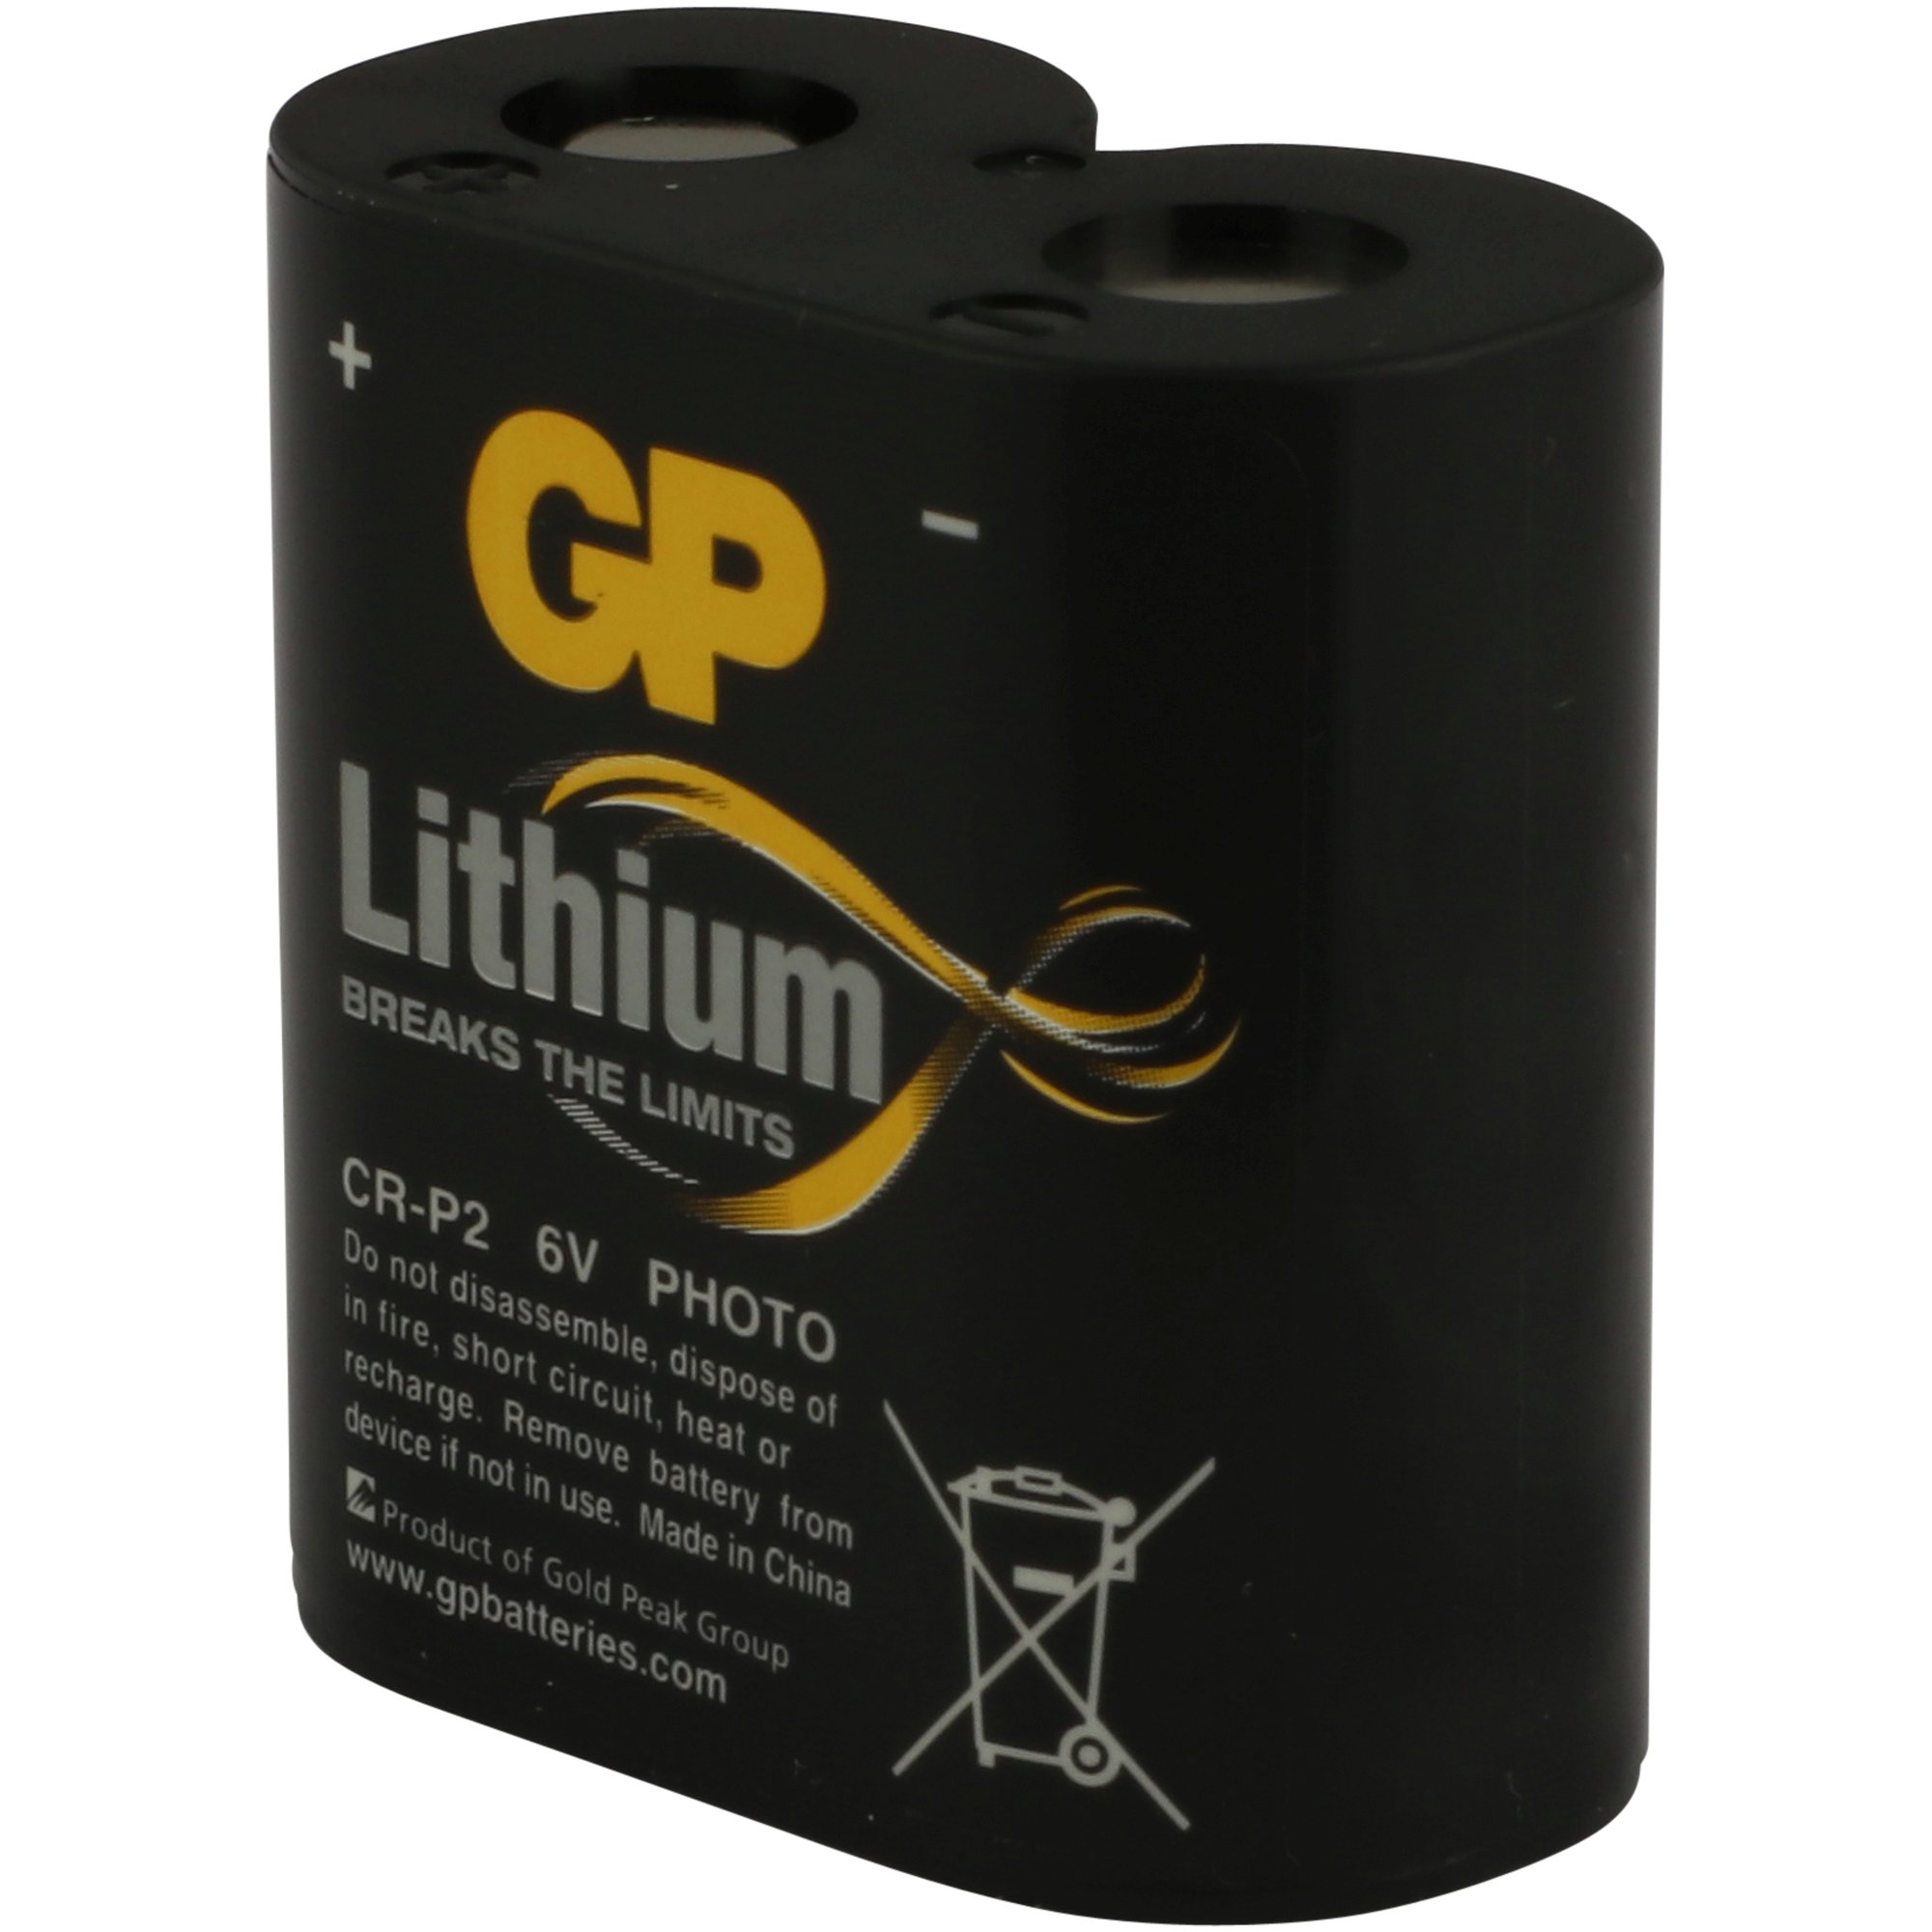 CRP2 Batterie GP Lithium 6V 1 Stück